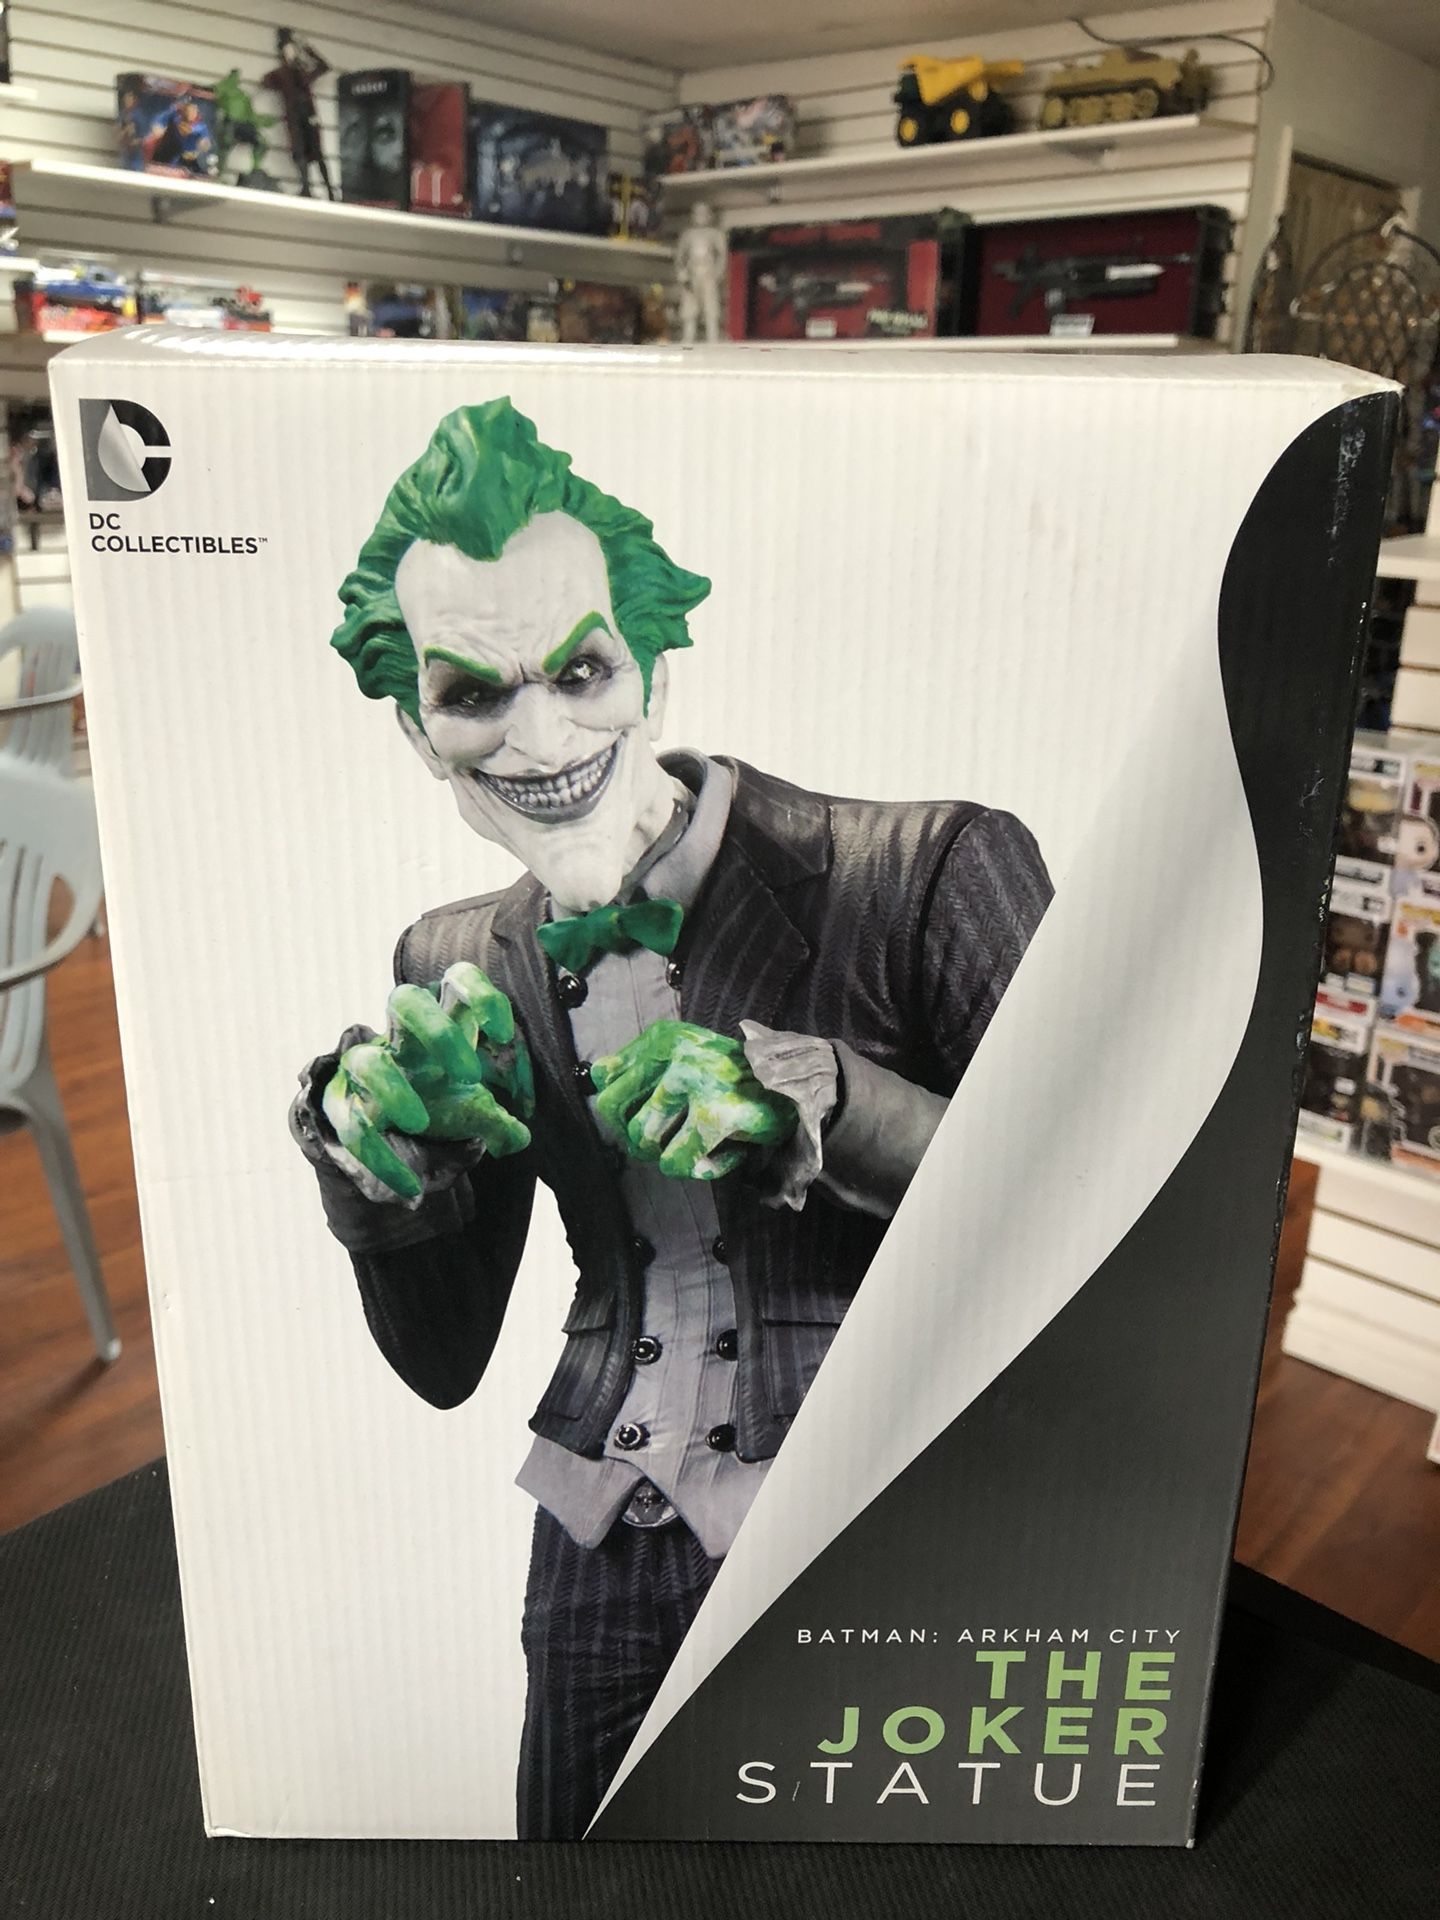 DC Collectibles Batman Arkham City The Joker Statue, Sculpted by Dave Cortes